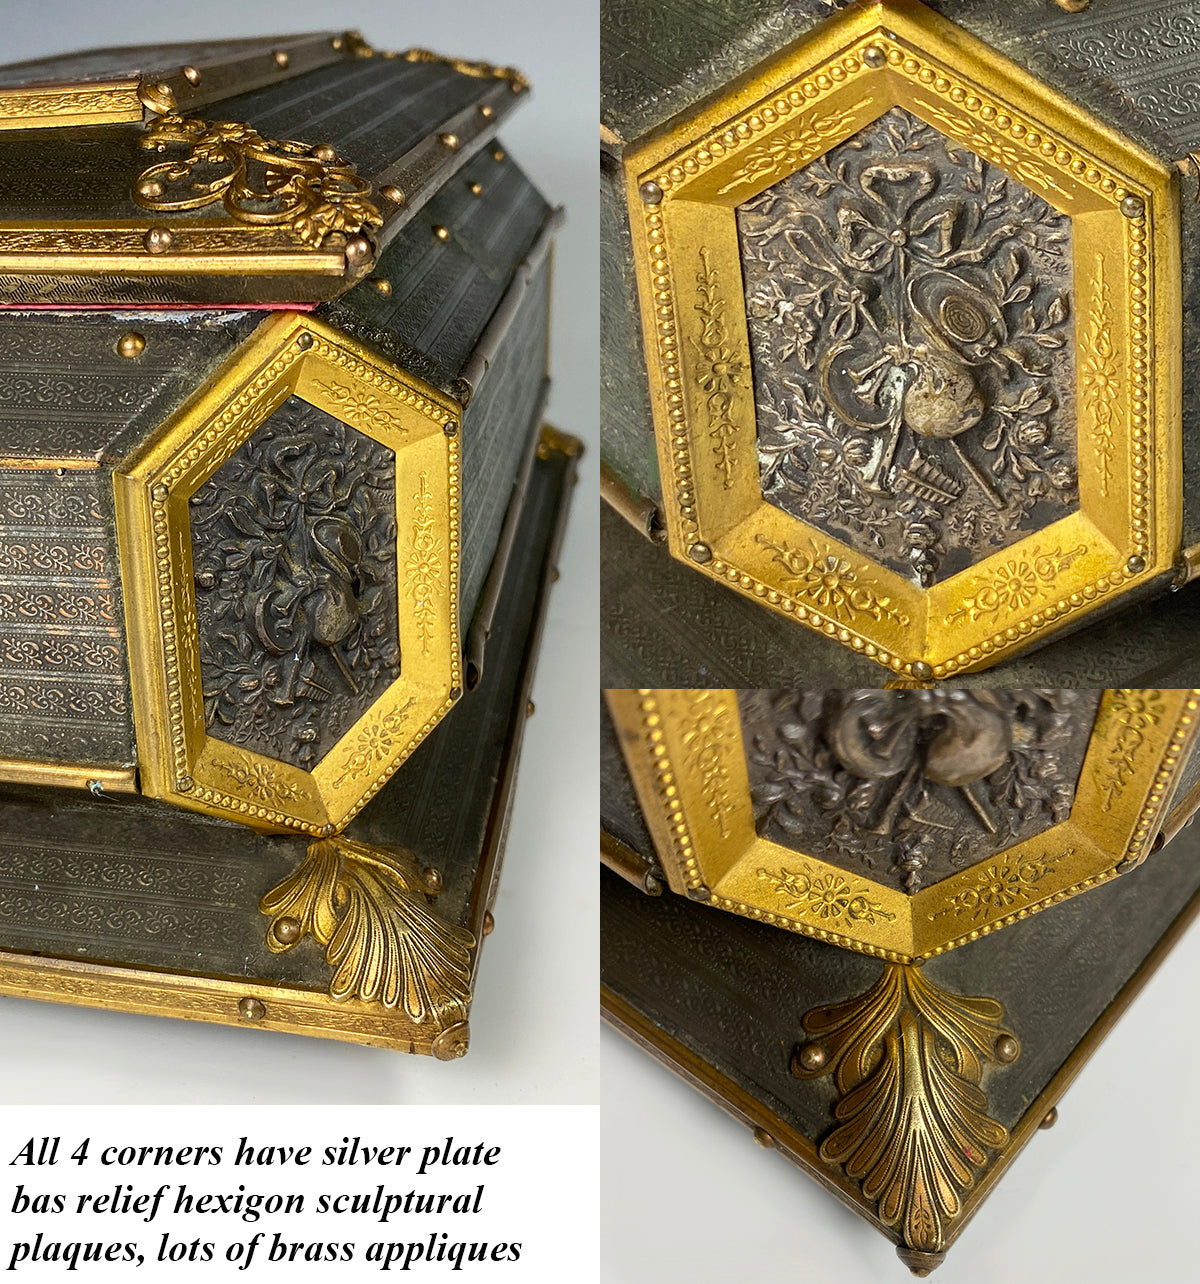 Rare Antique French Chocolatier's or Confectioner's Presentation Box, Ormolu & Etched Plaque